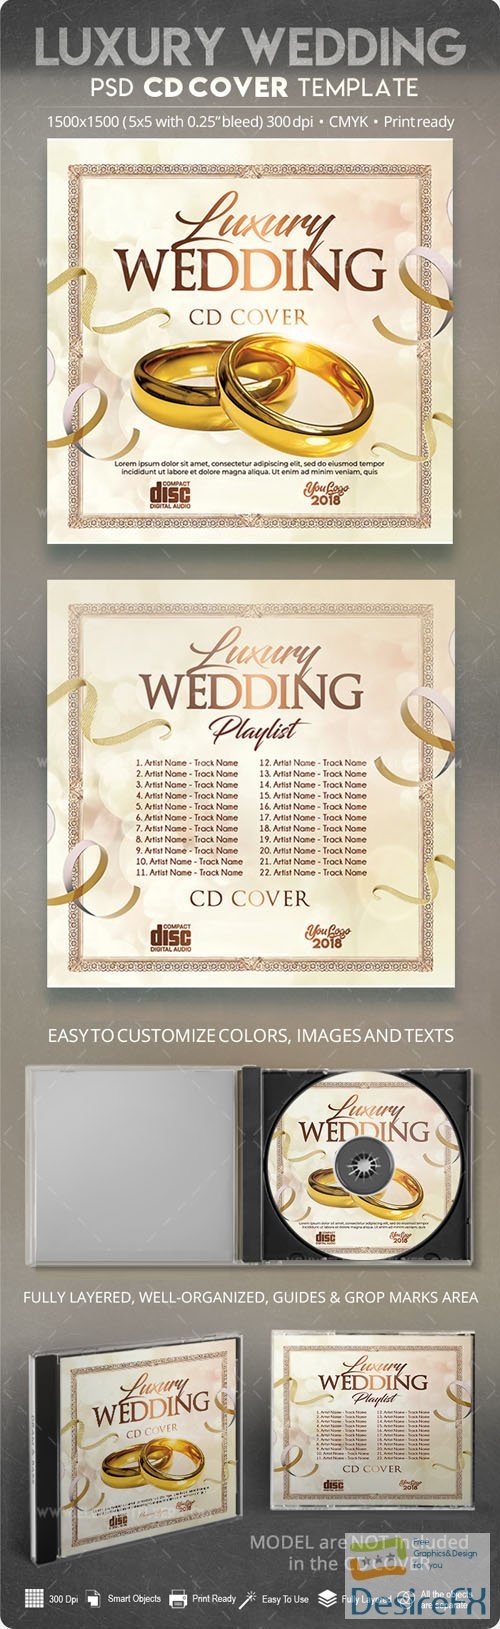 Luxury Wedding - PSD CD Cover Templates